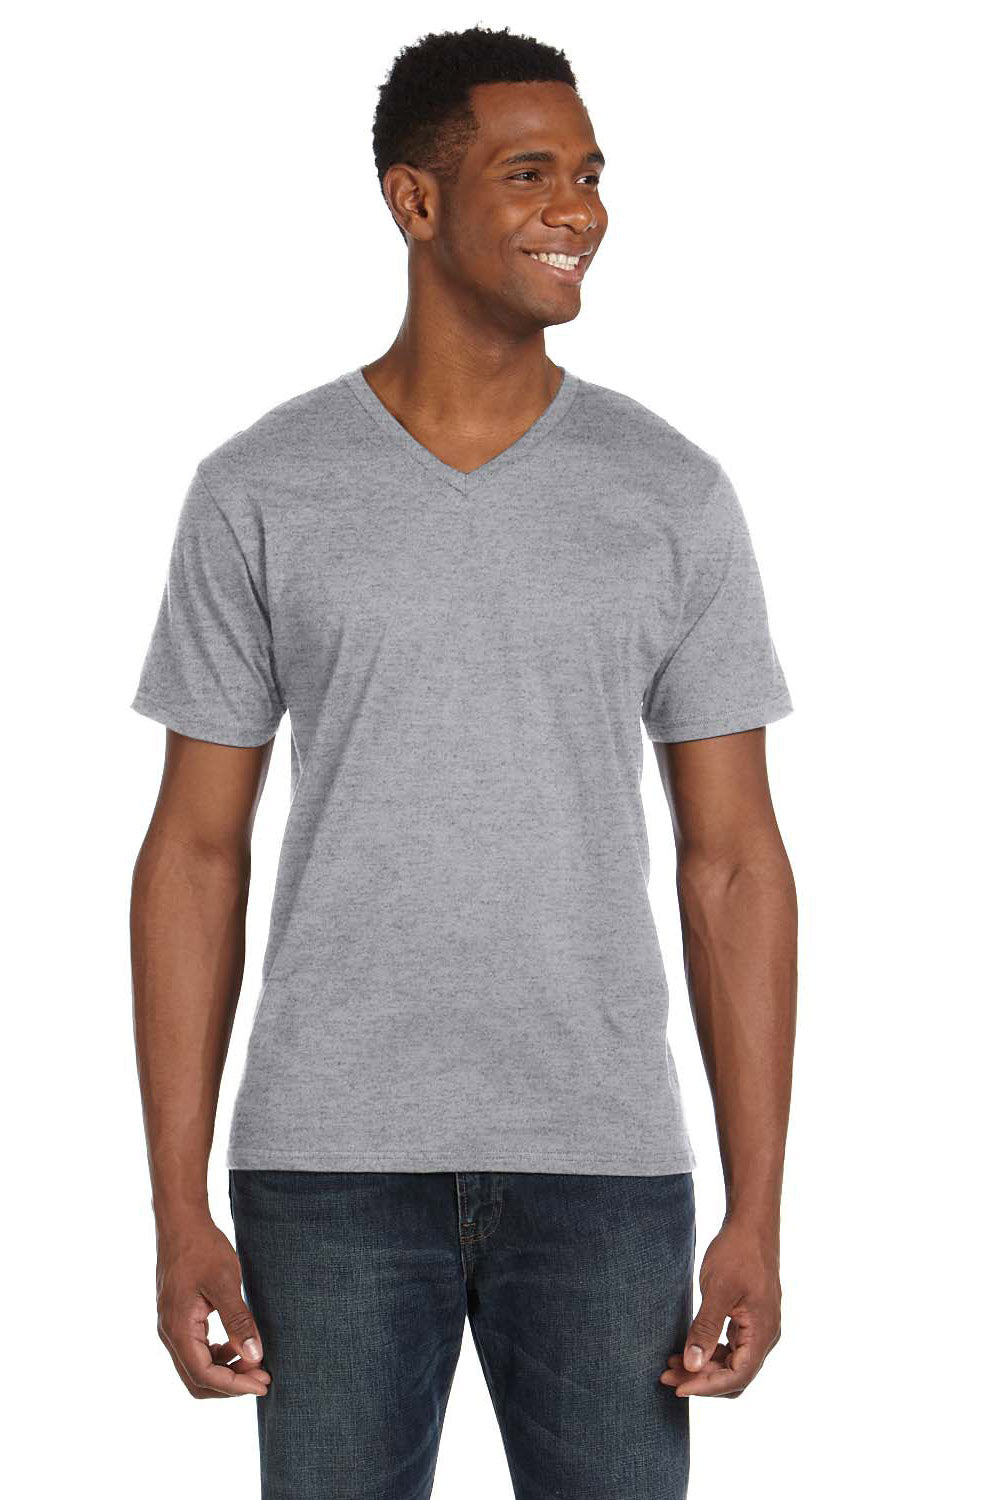 Anvil Mens Short Sleeve V-Neck T-Shirt 982 - BigTopShirtShop.com